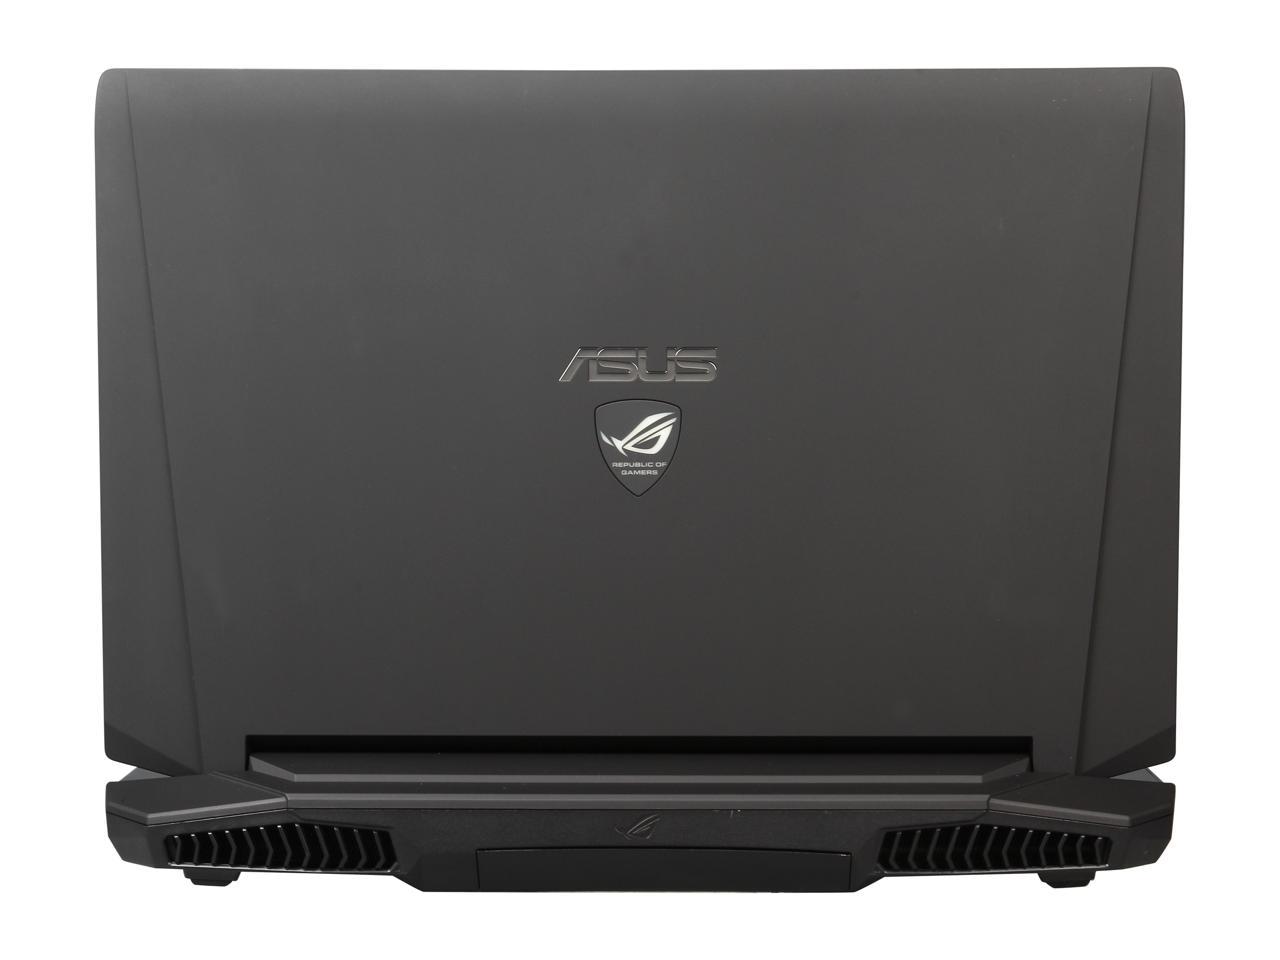 Refurbished: ASUS G750JW-DB71 Gaming Laptop Intel Core i7-4700HQ 2.4GHz ...